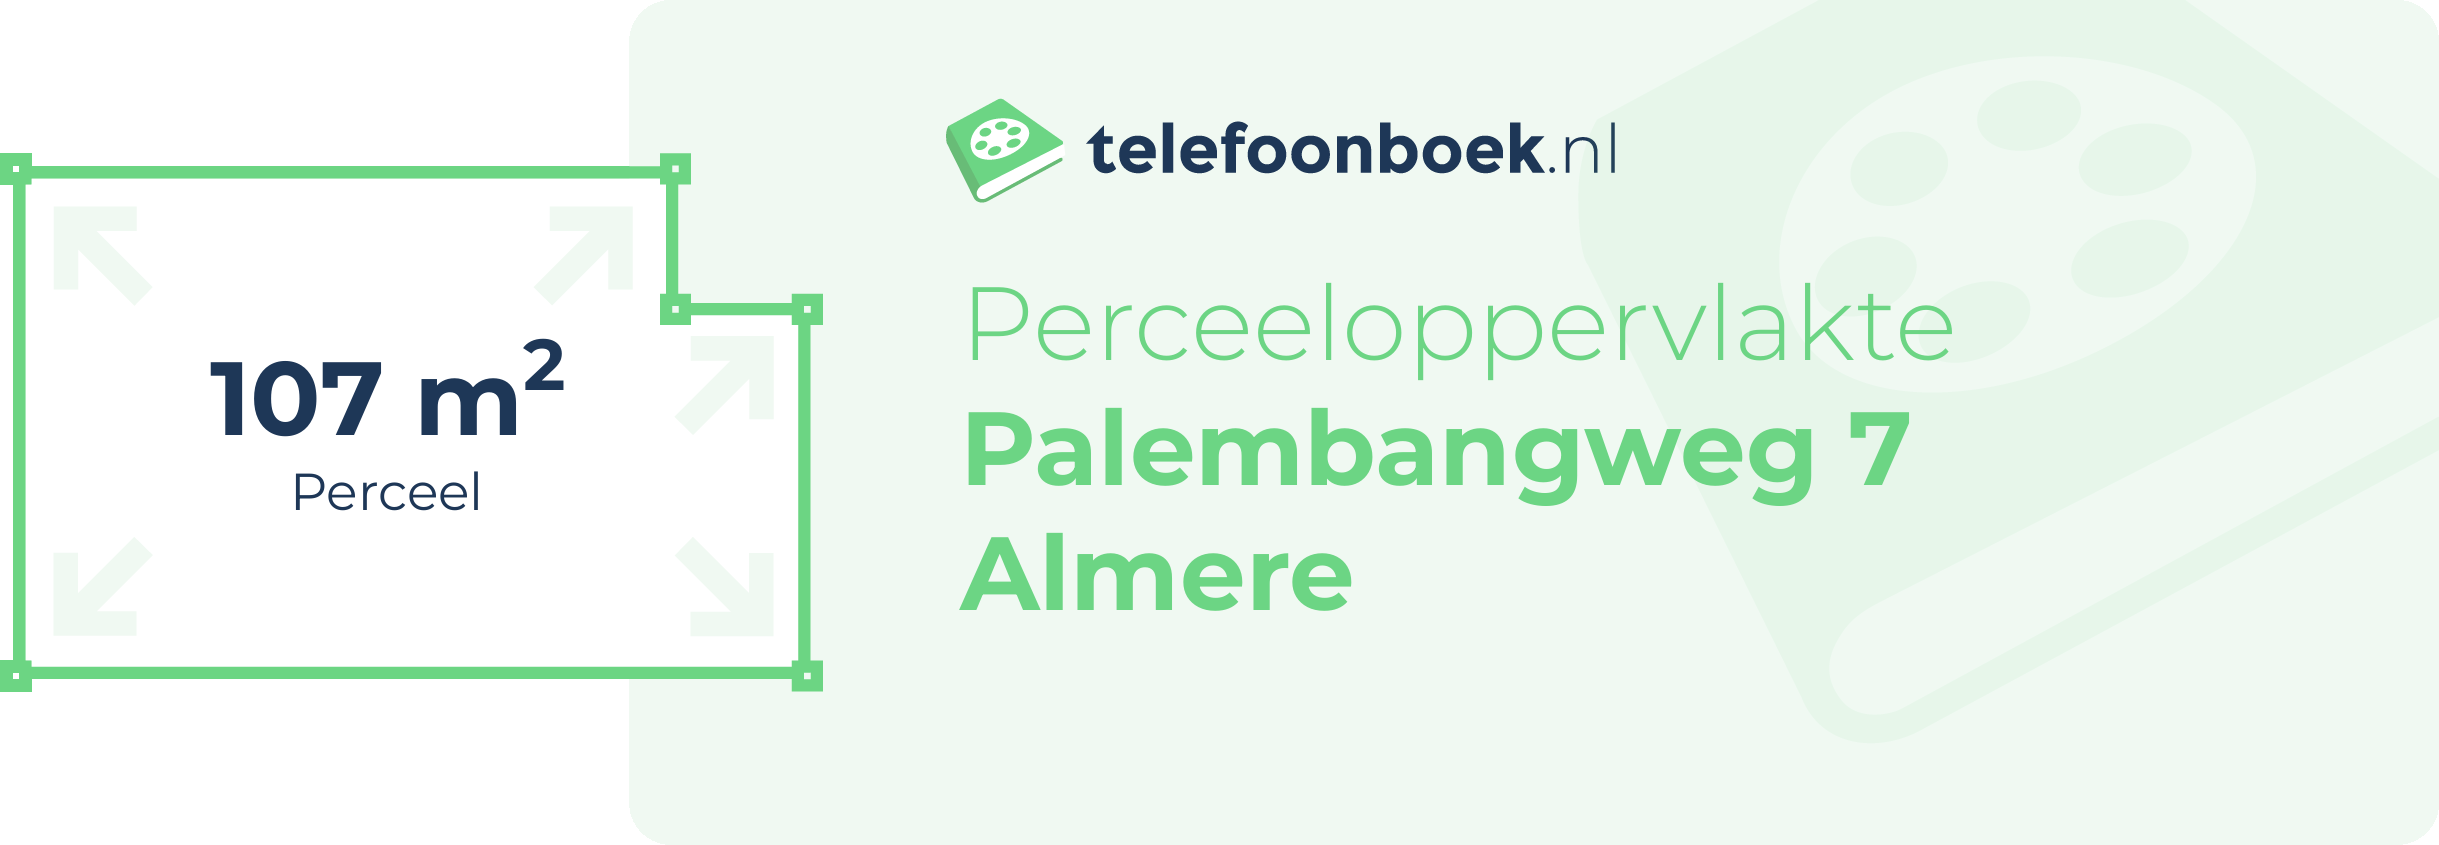 Perceeloppervlakte Palembangweg 7 Almere